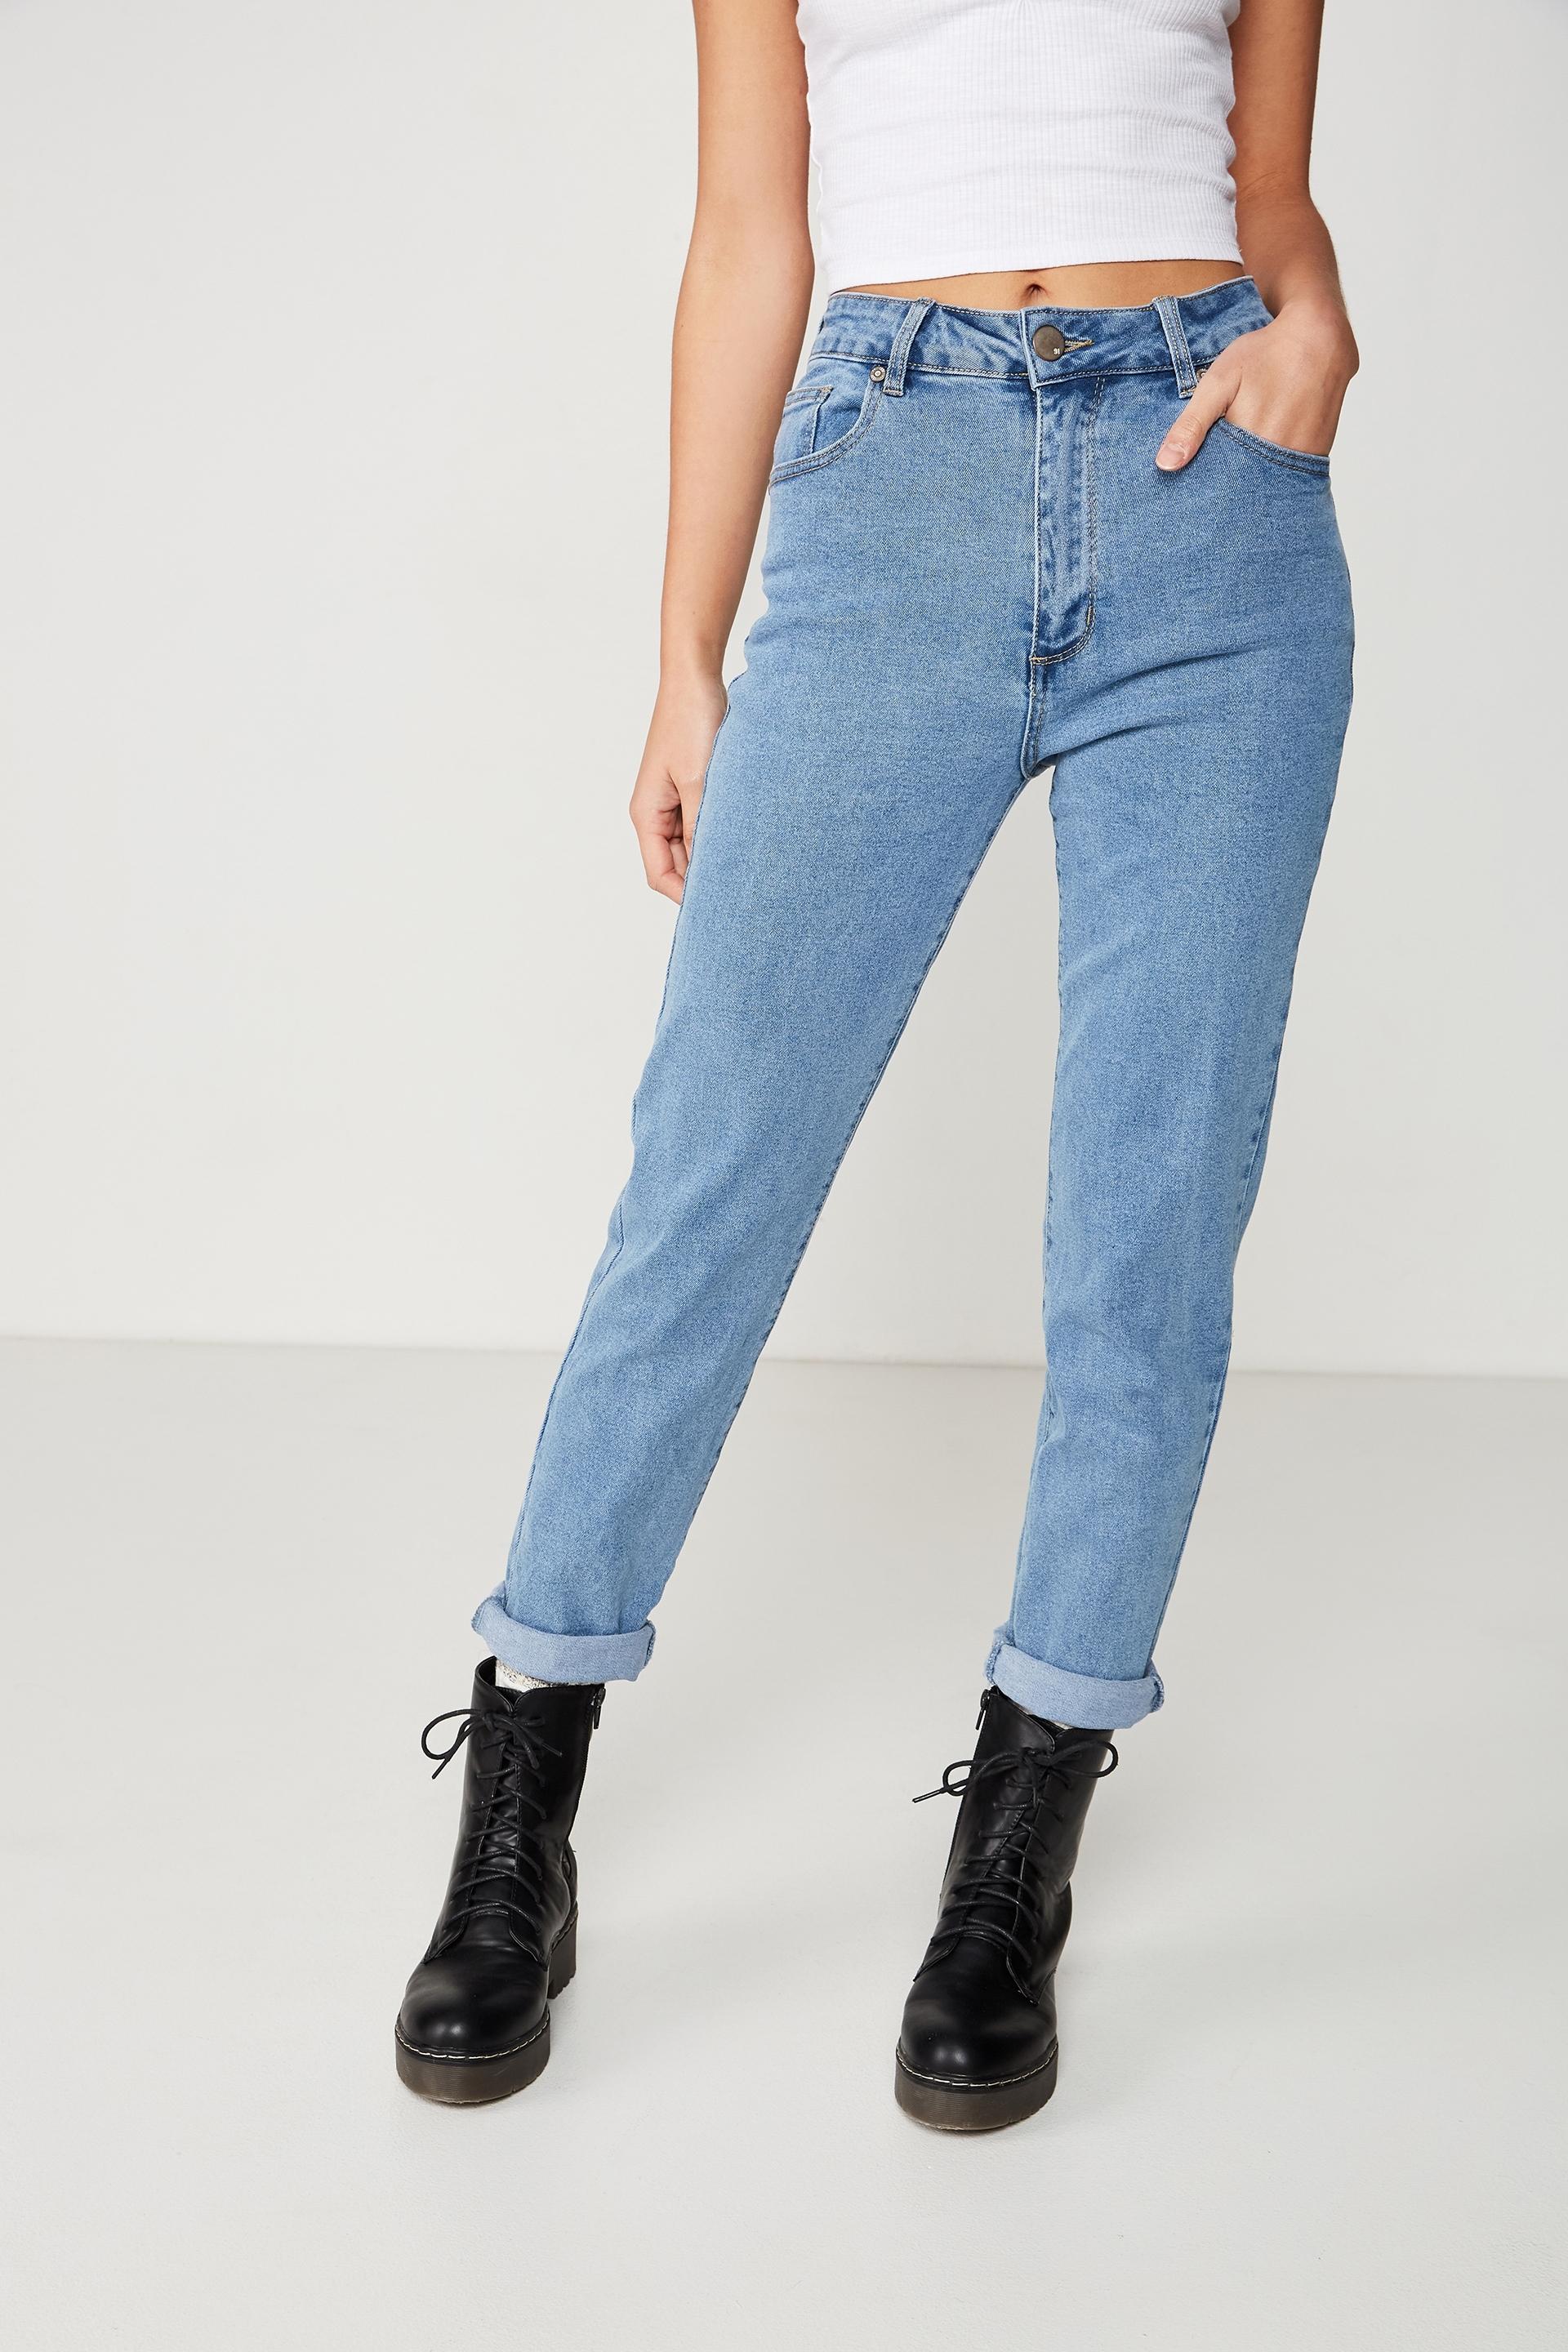 Stretch mom jeans - stonewash blue Cotton On Jeans | Superbalist.com